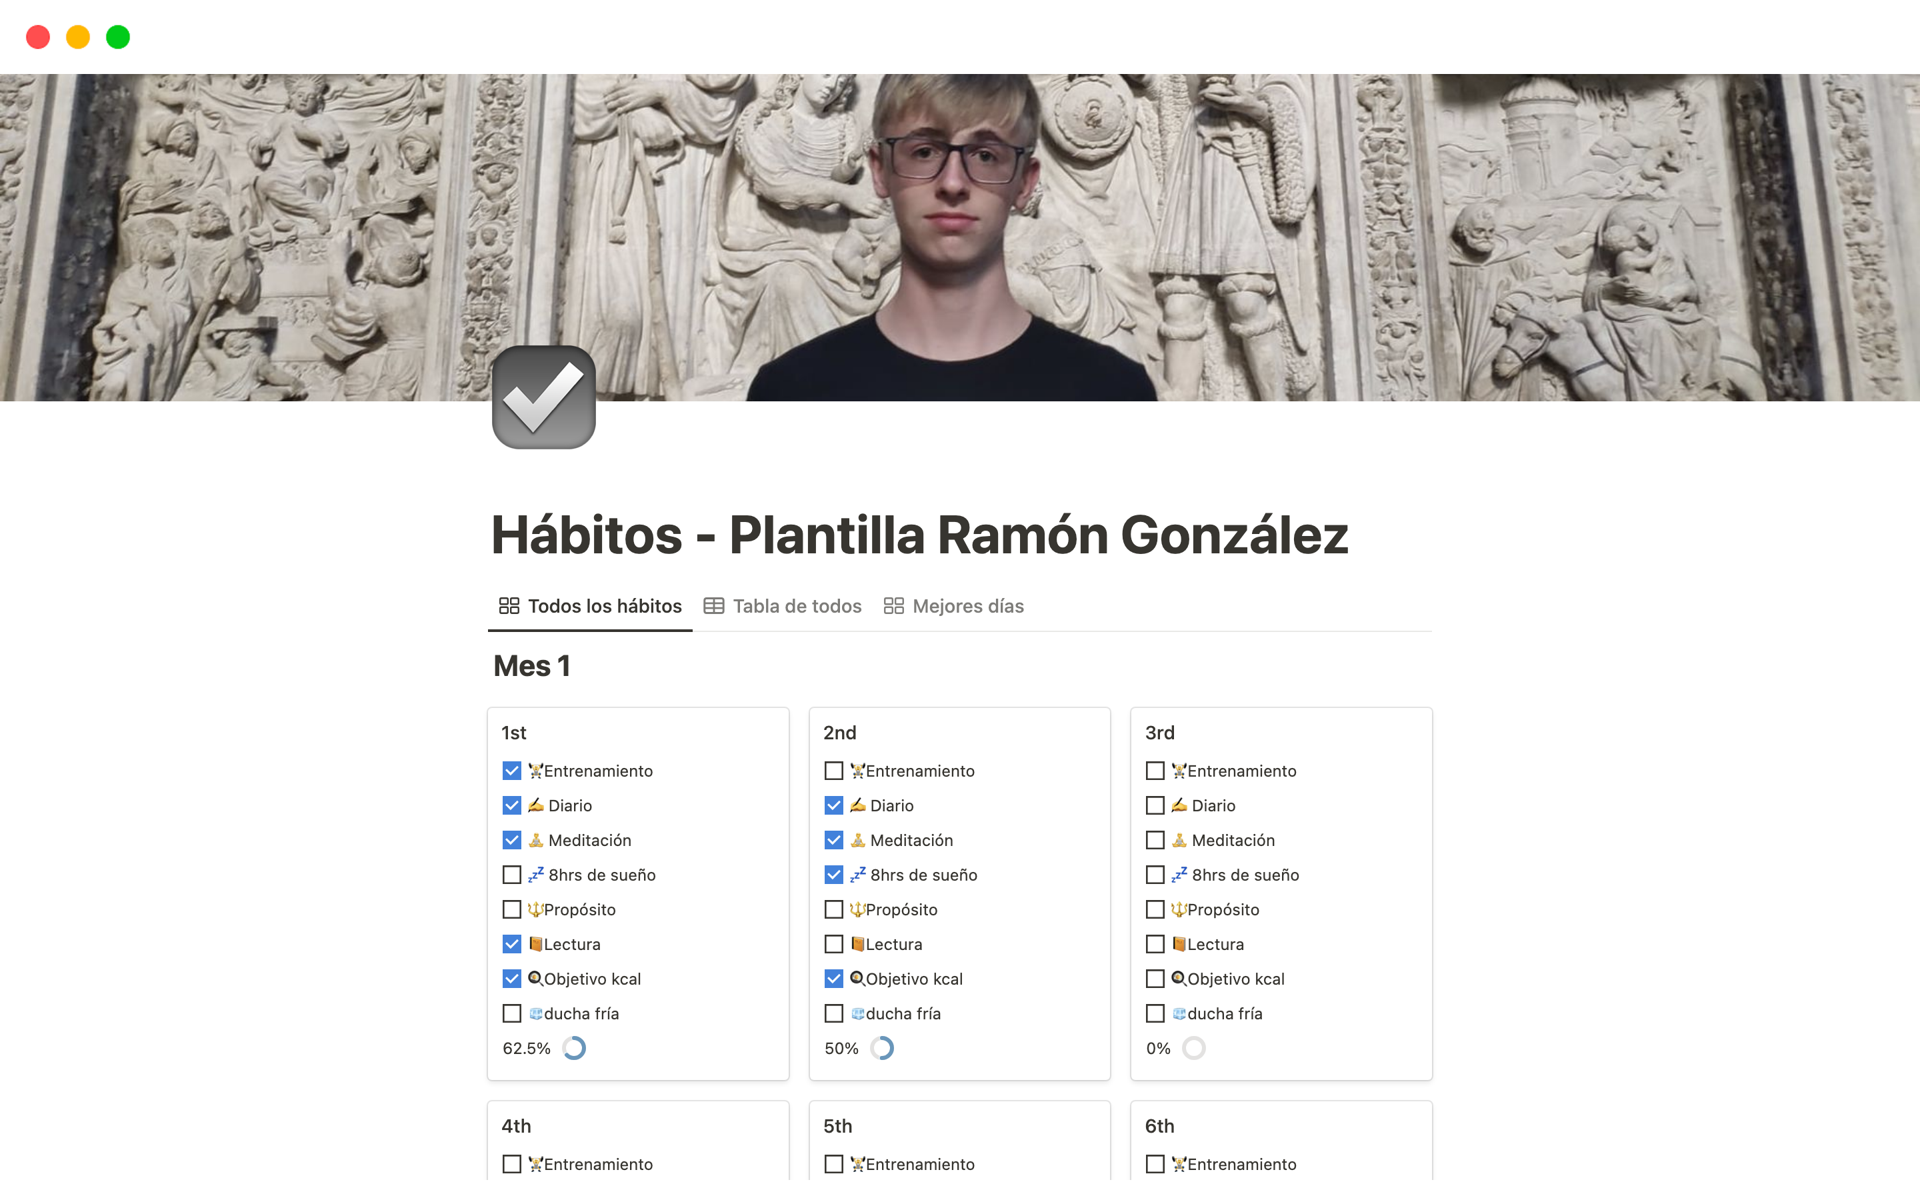 Vista previa de una plantilla para Hábitos - Plantilla Ramón González